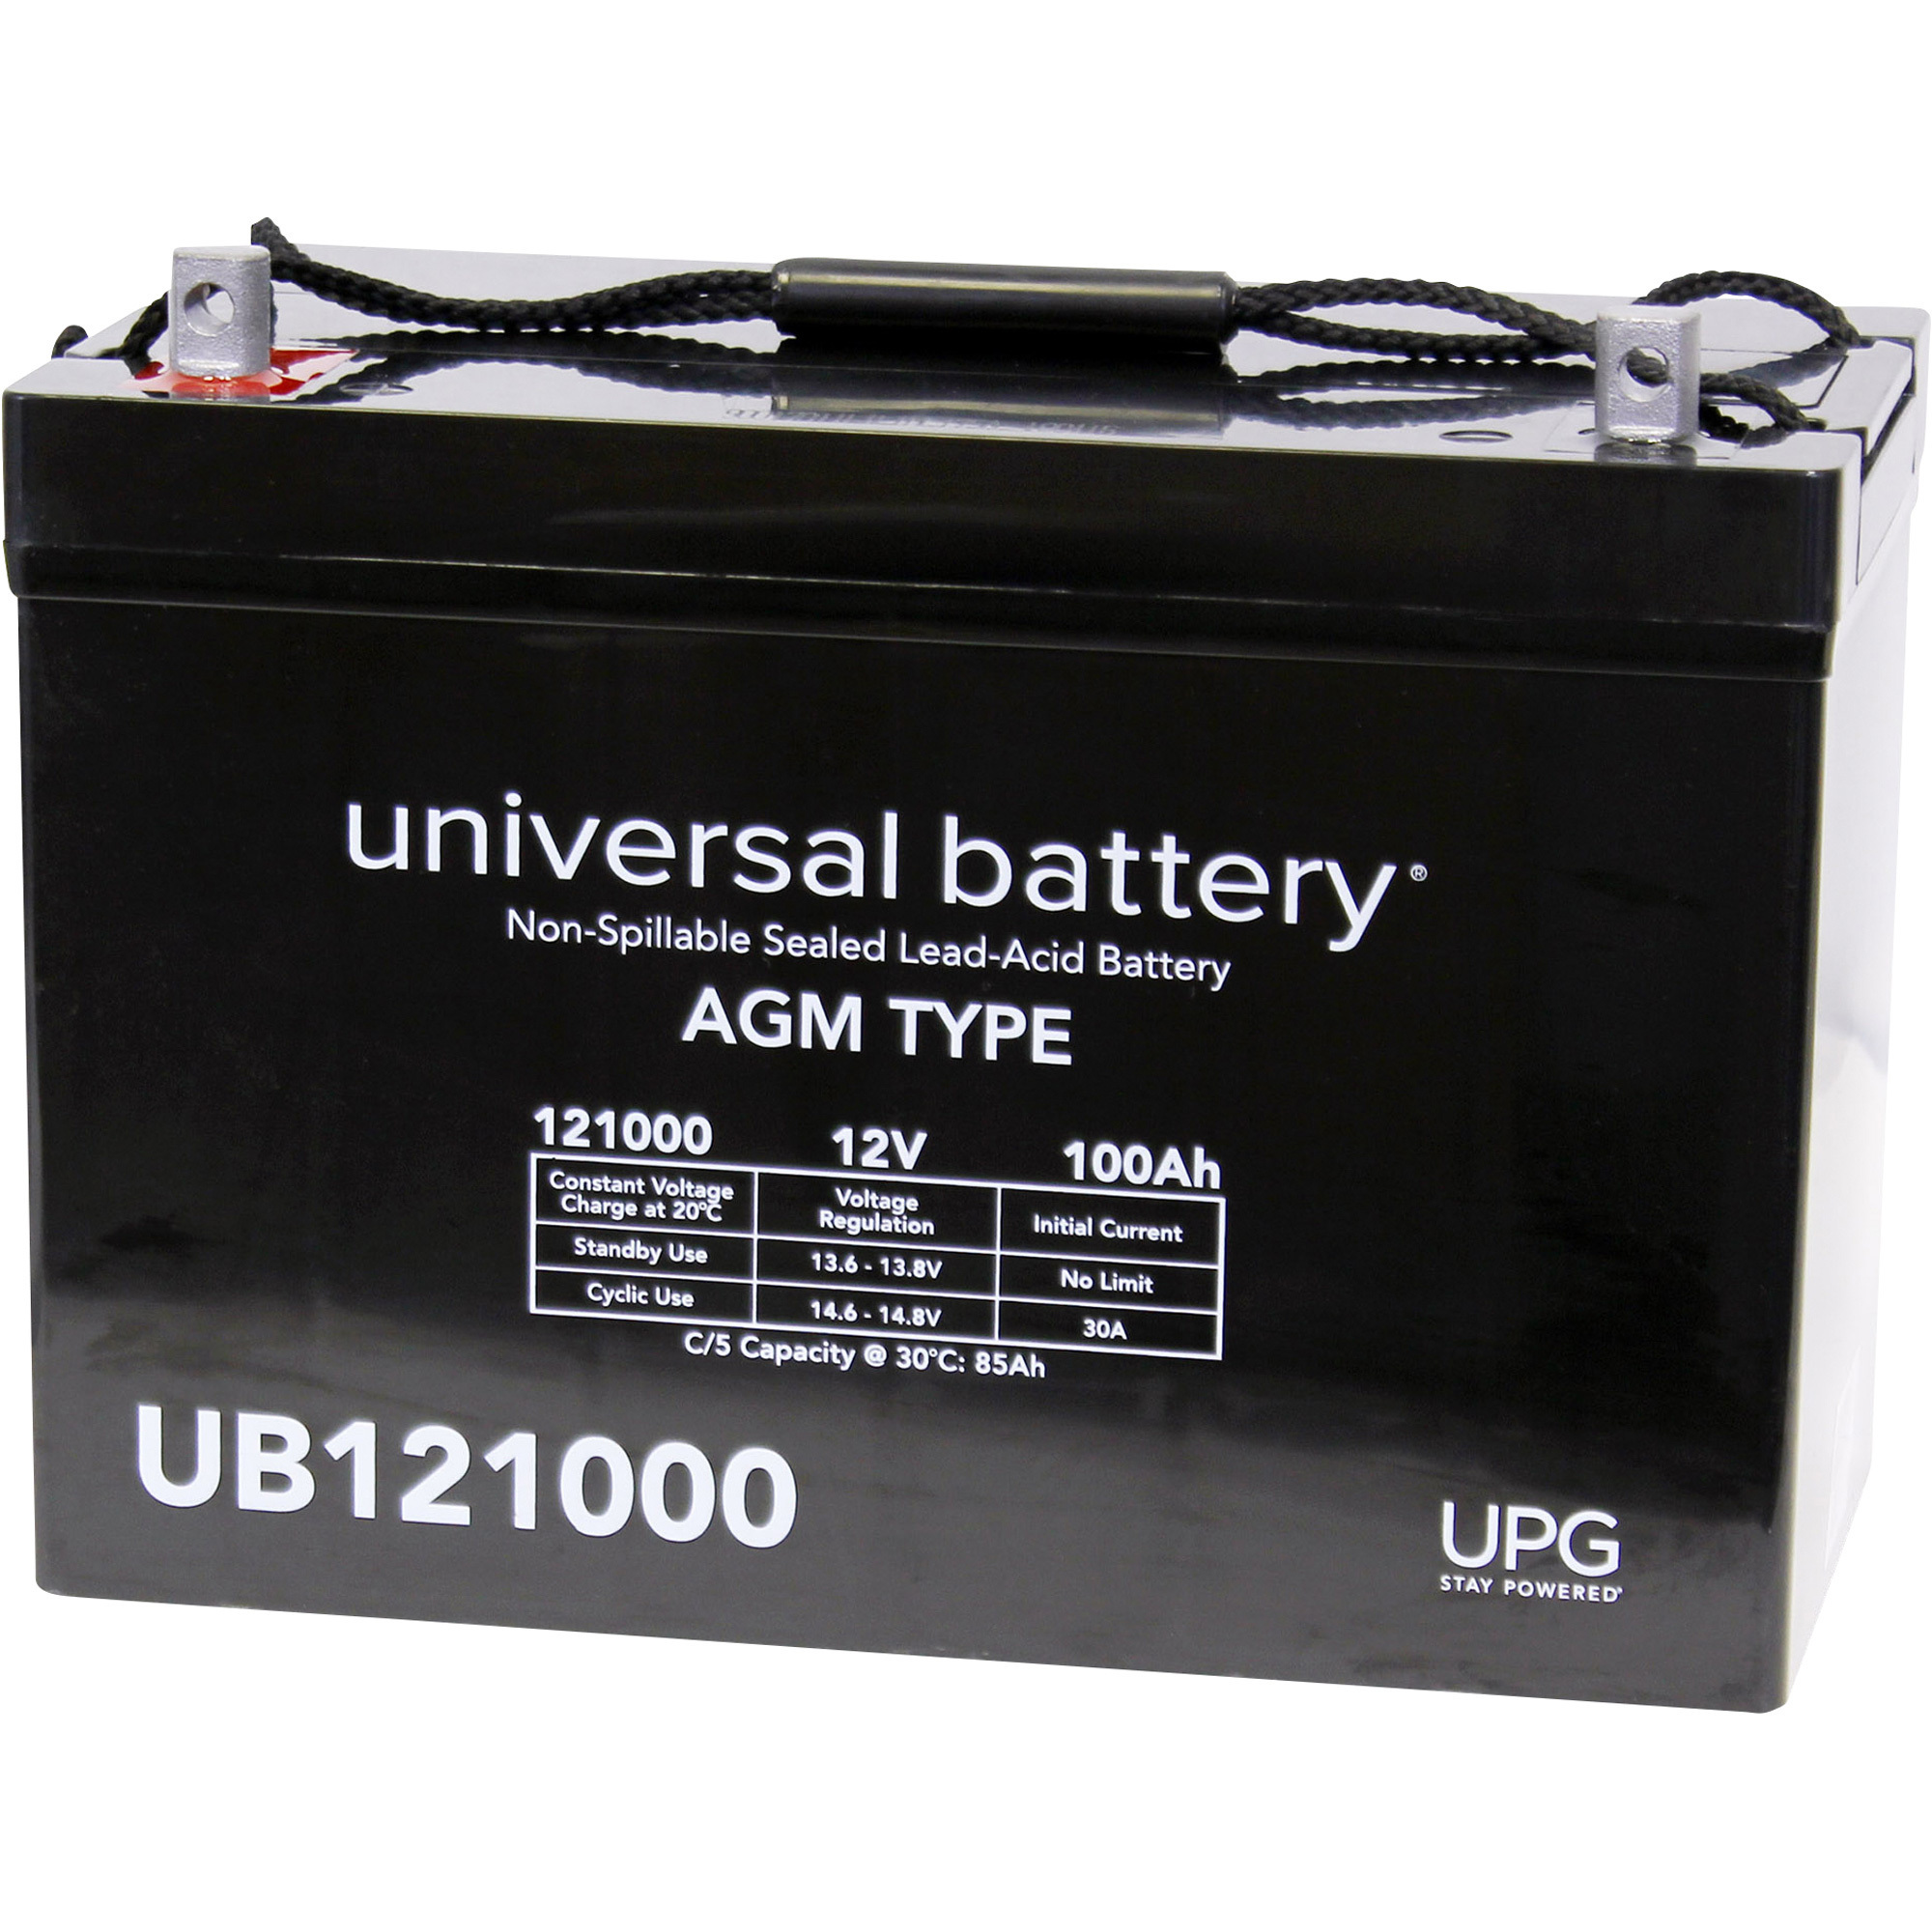 UPG Universal Sealed Lead-Acid Battery, AGM-type, 12V, 100 Amps, Group 27, Model UB121000